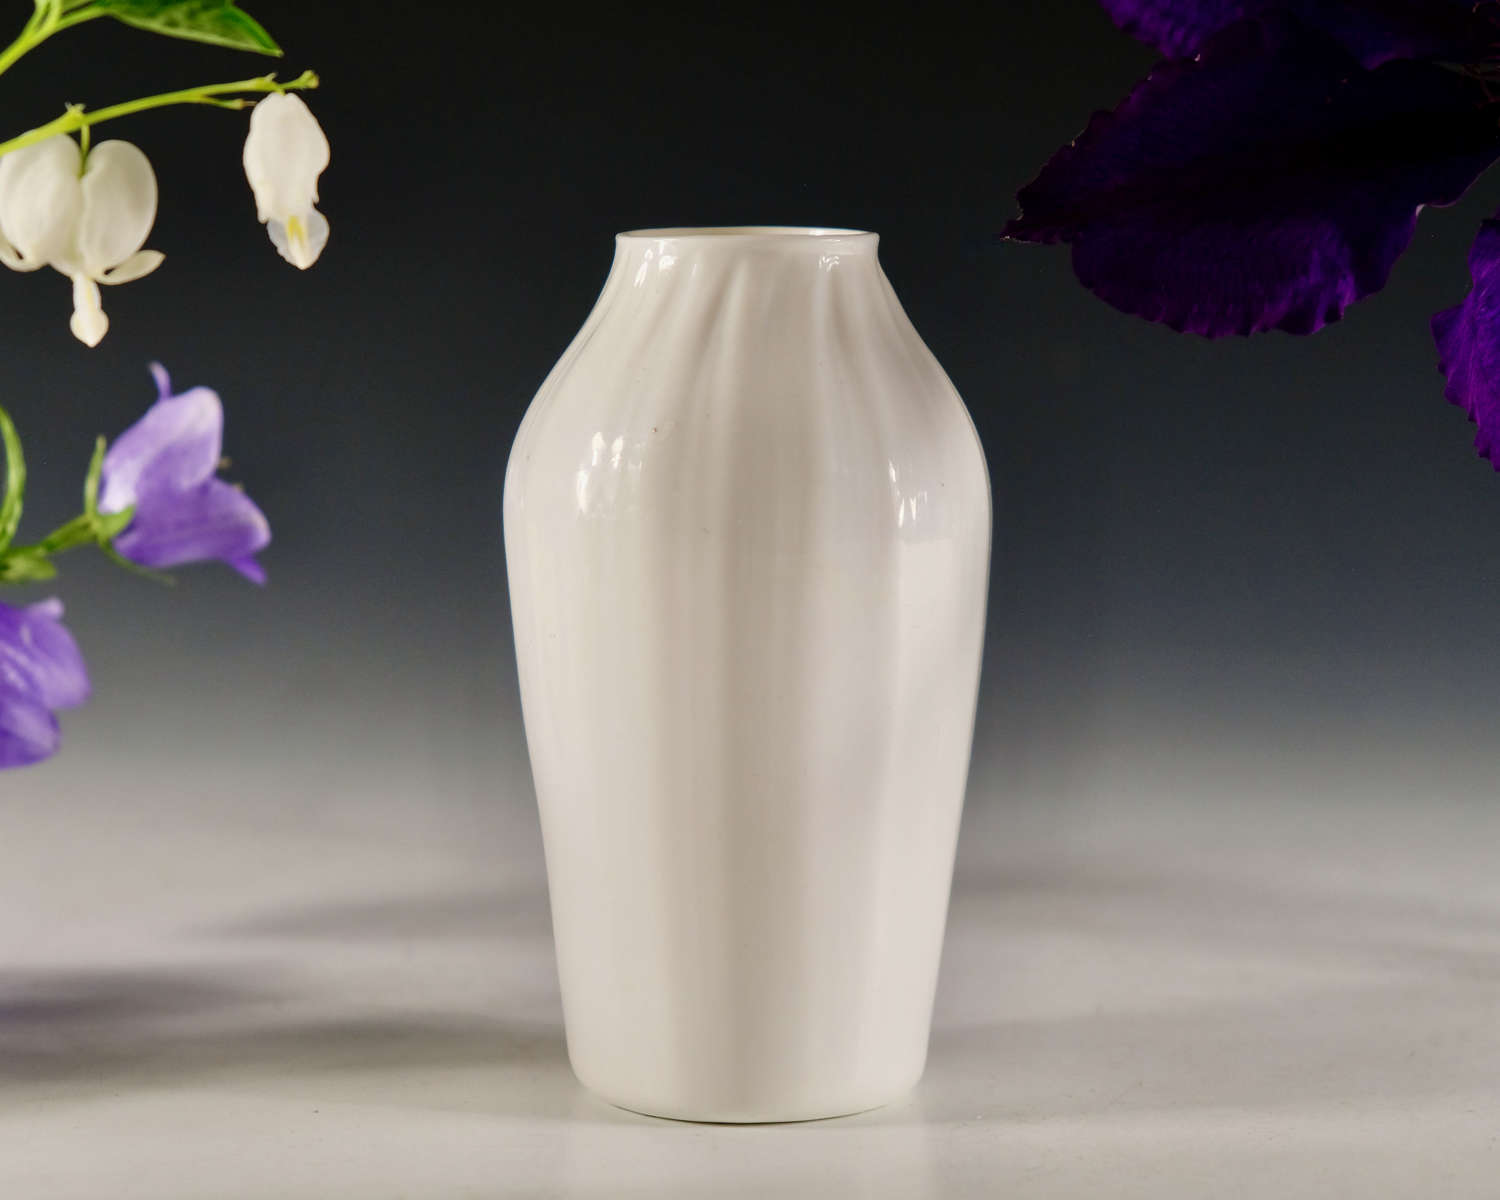 Antique glass - rare opaque white vase English c1760